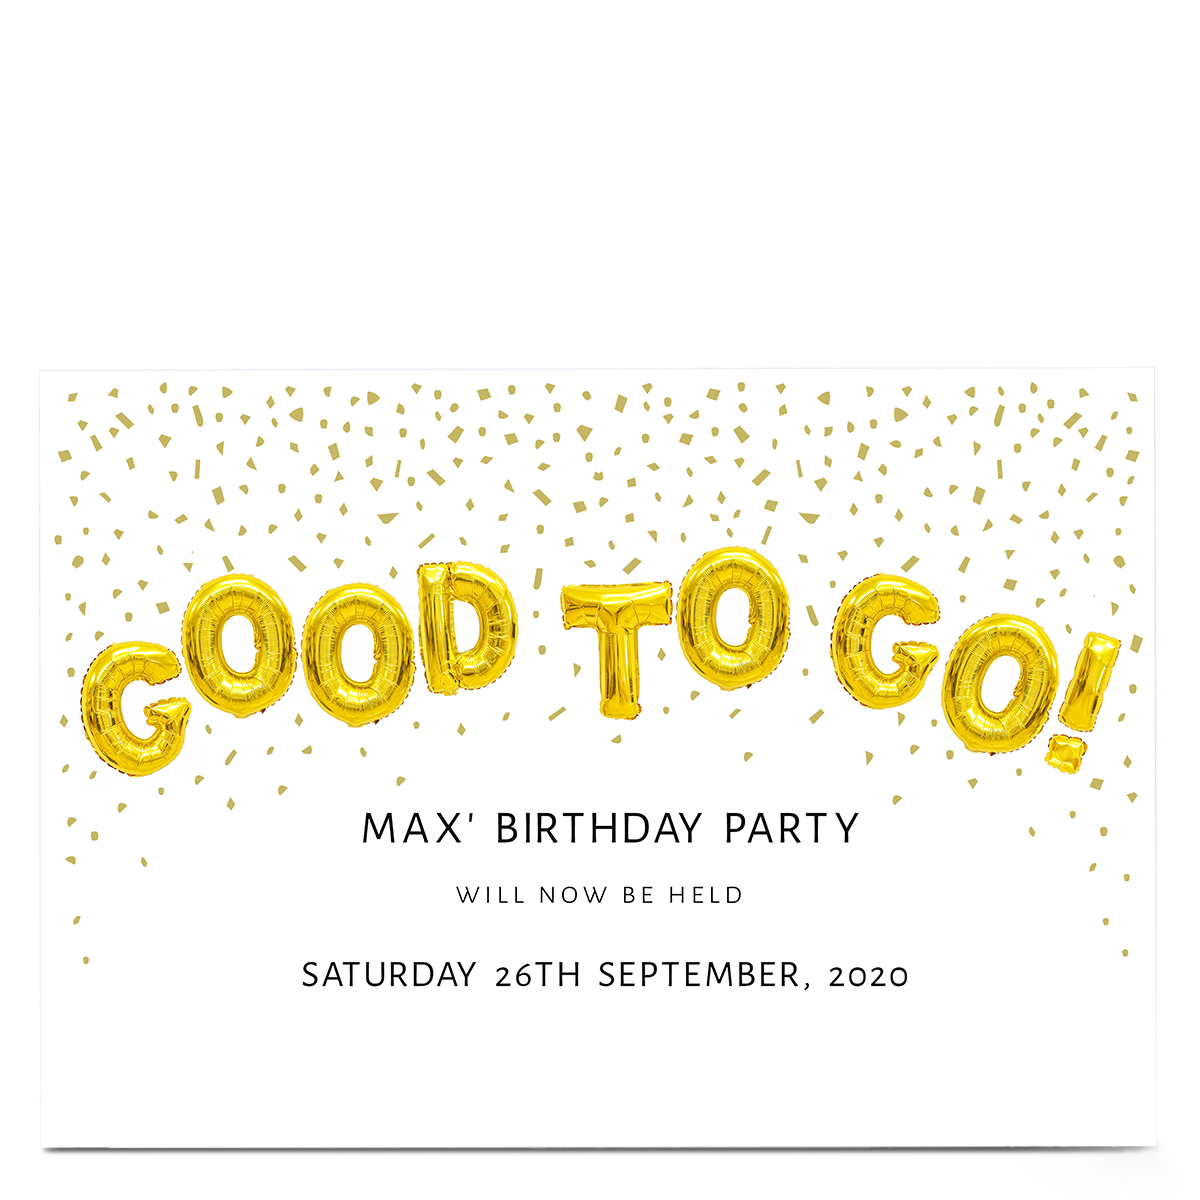 Personalised Birthday Invitation - Good To Go!